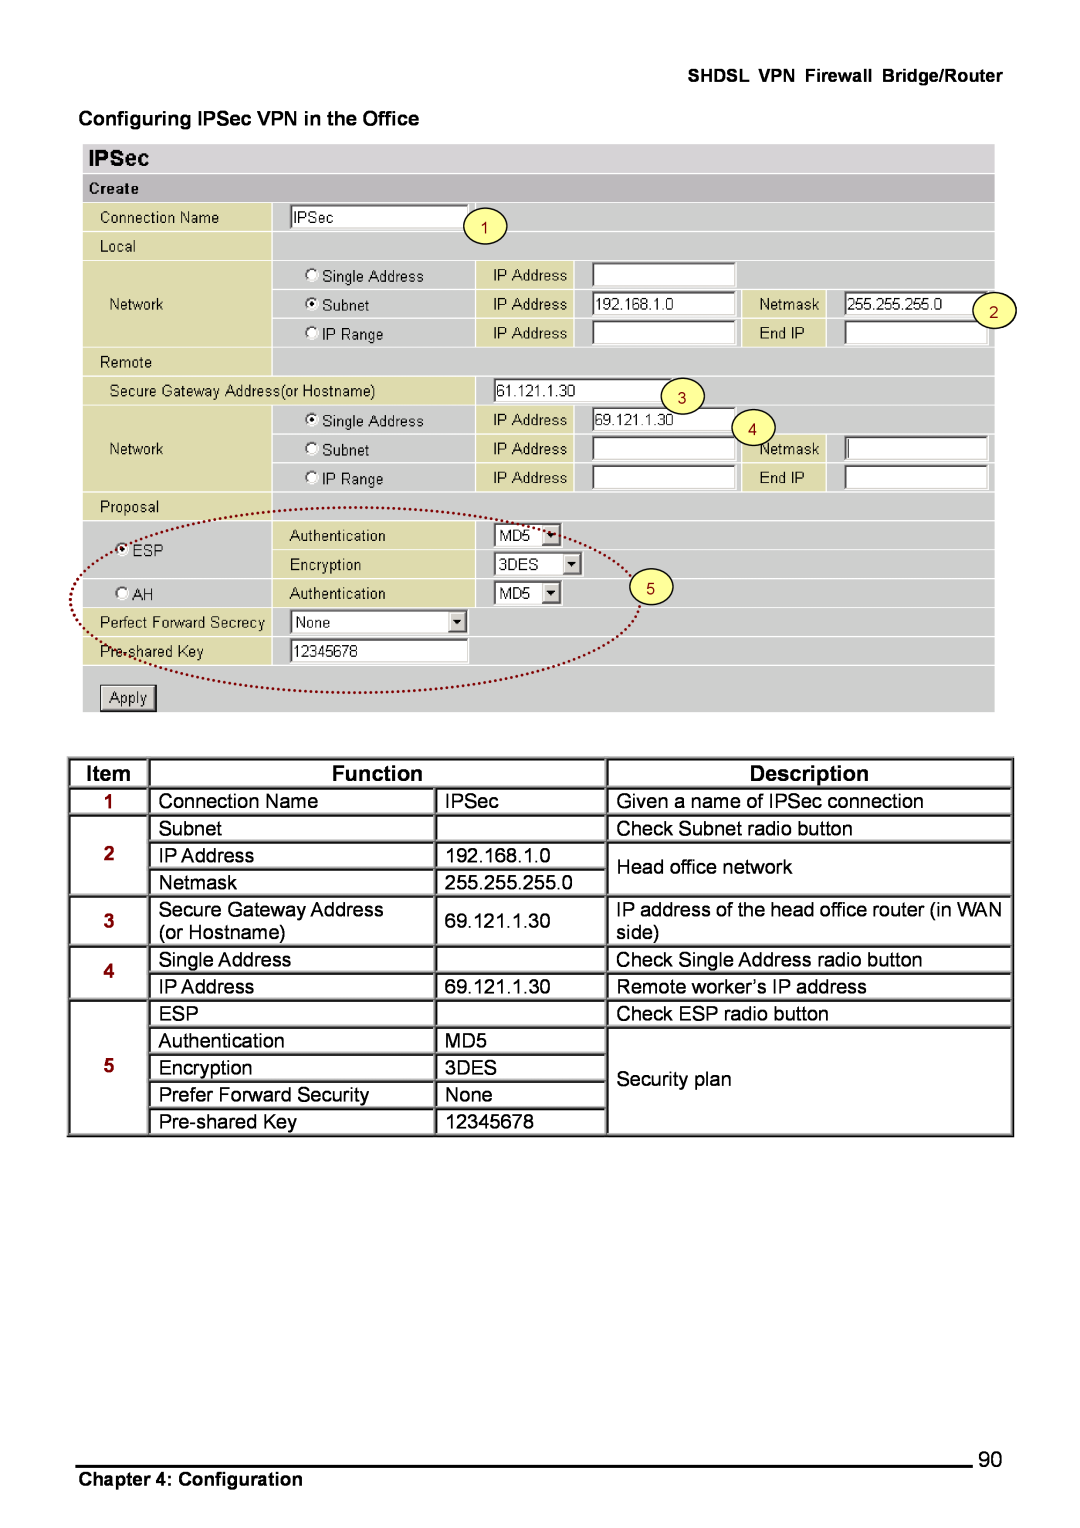 Billion Electric Company 8501 user manual Function, Description, Configuring IPSec VPN in the Office 